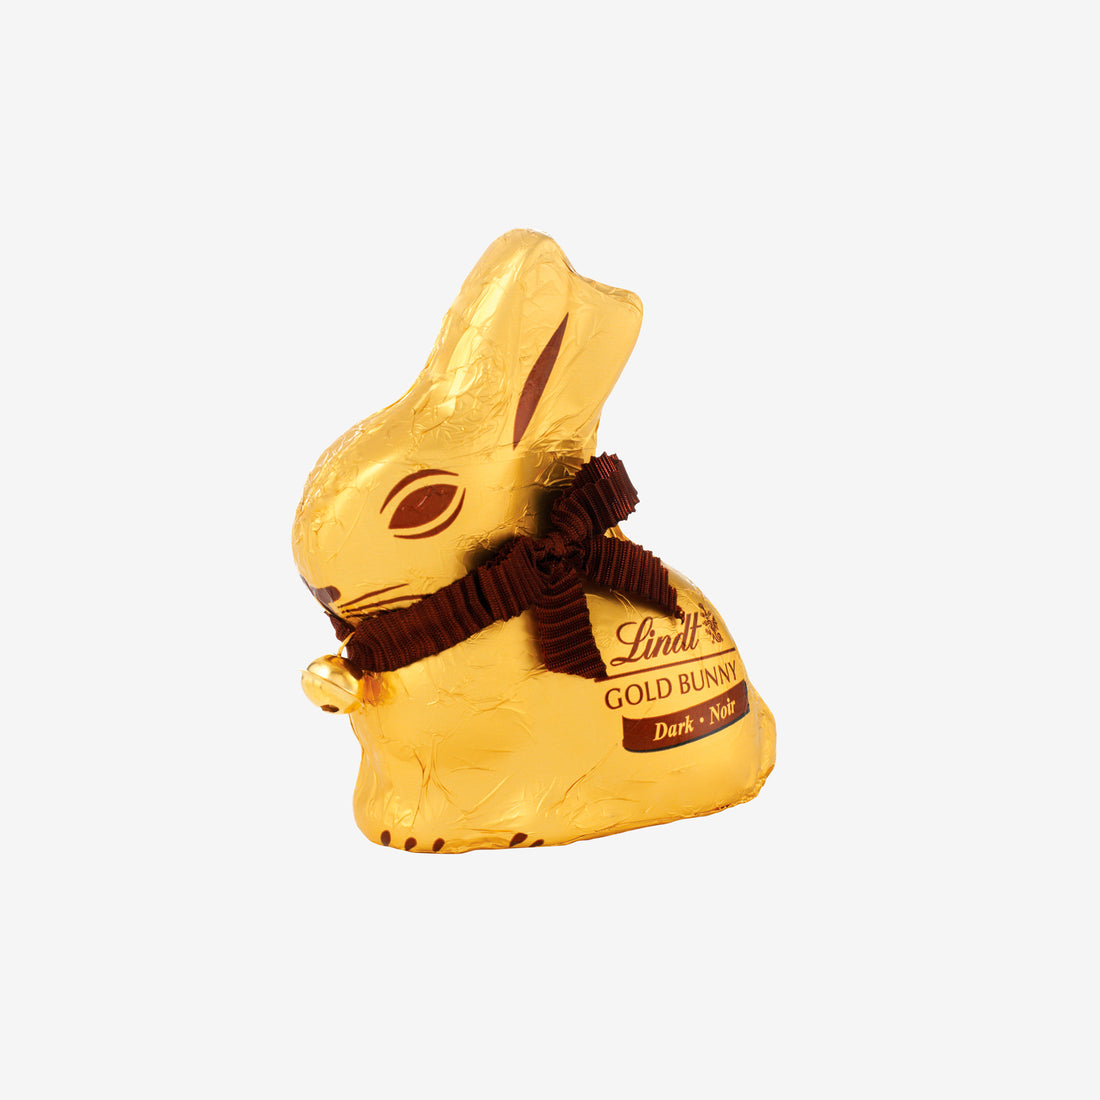 Gold Bunny Dark Chocolate 100g